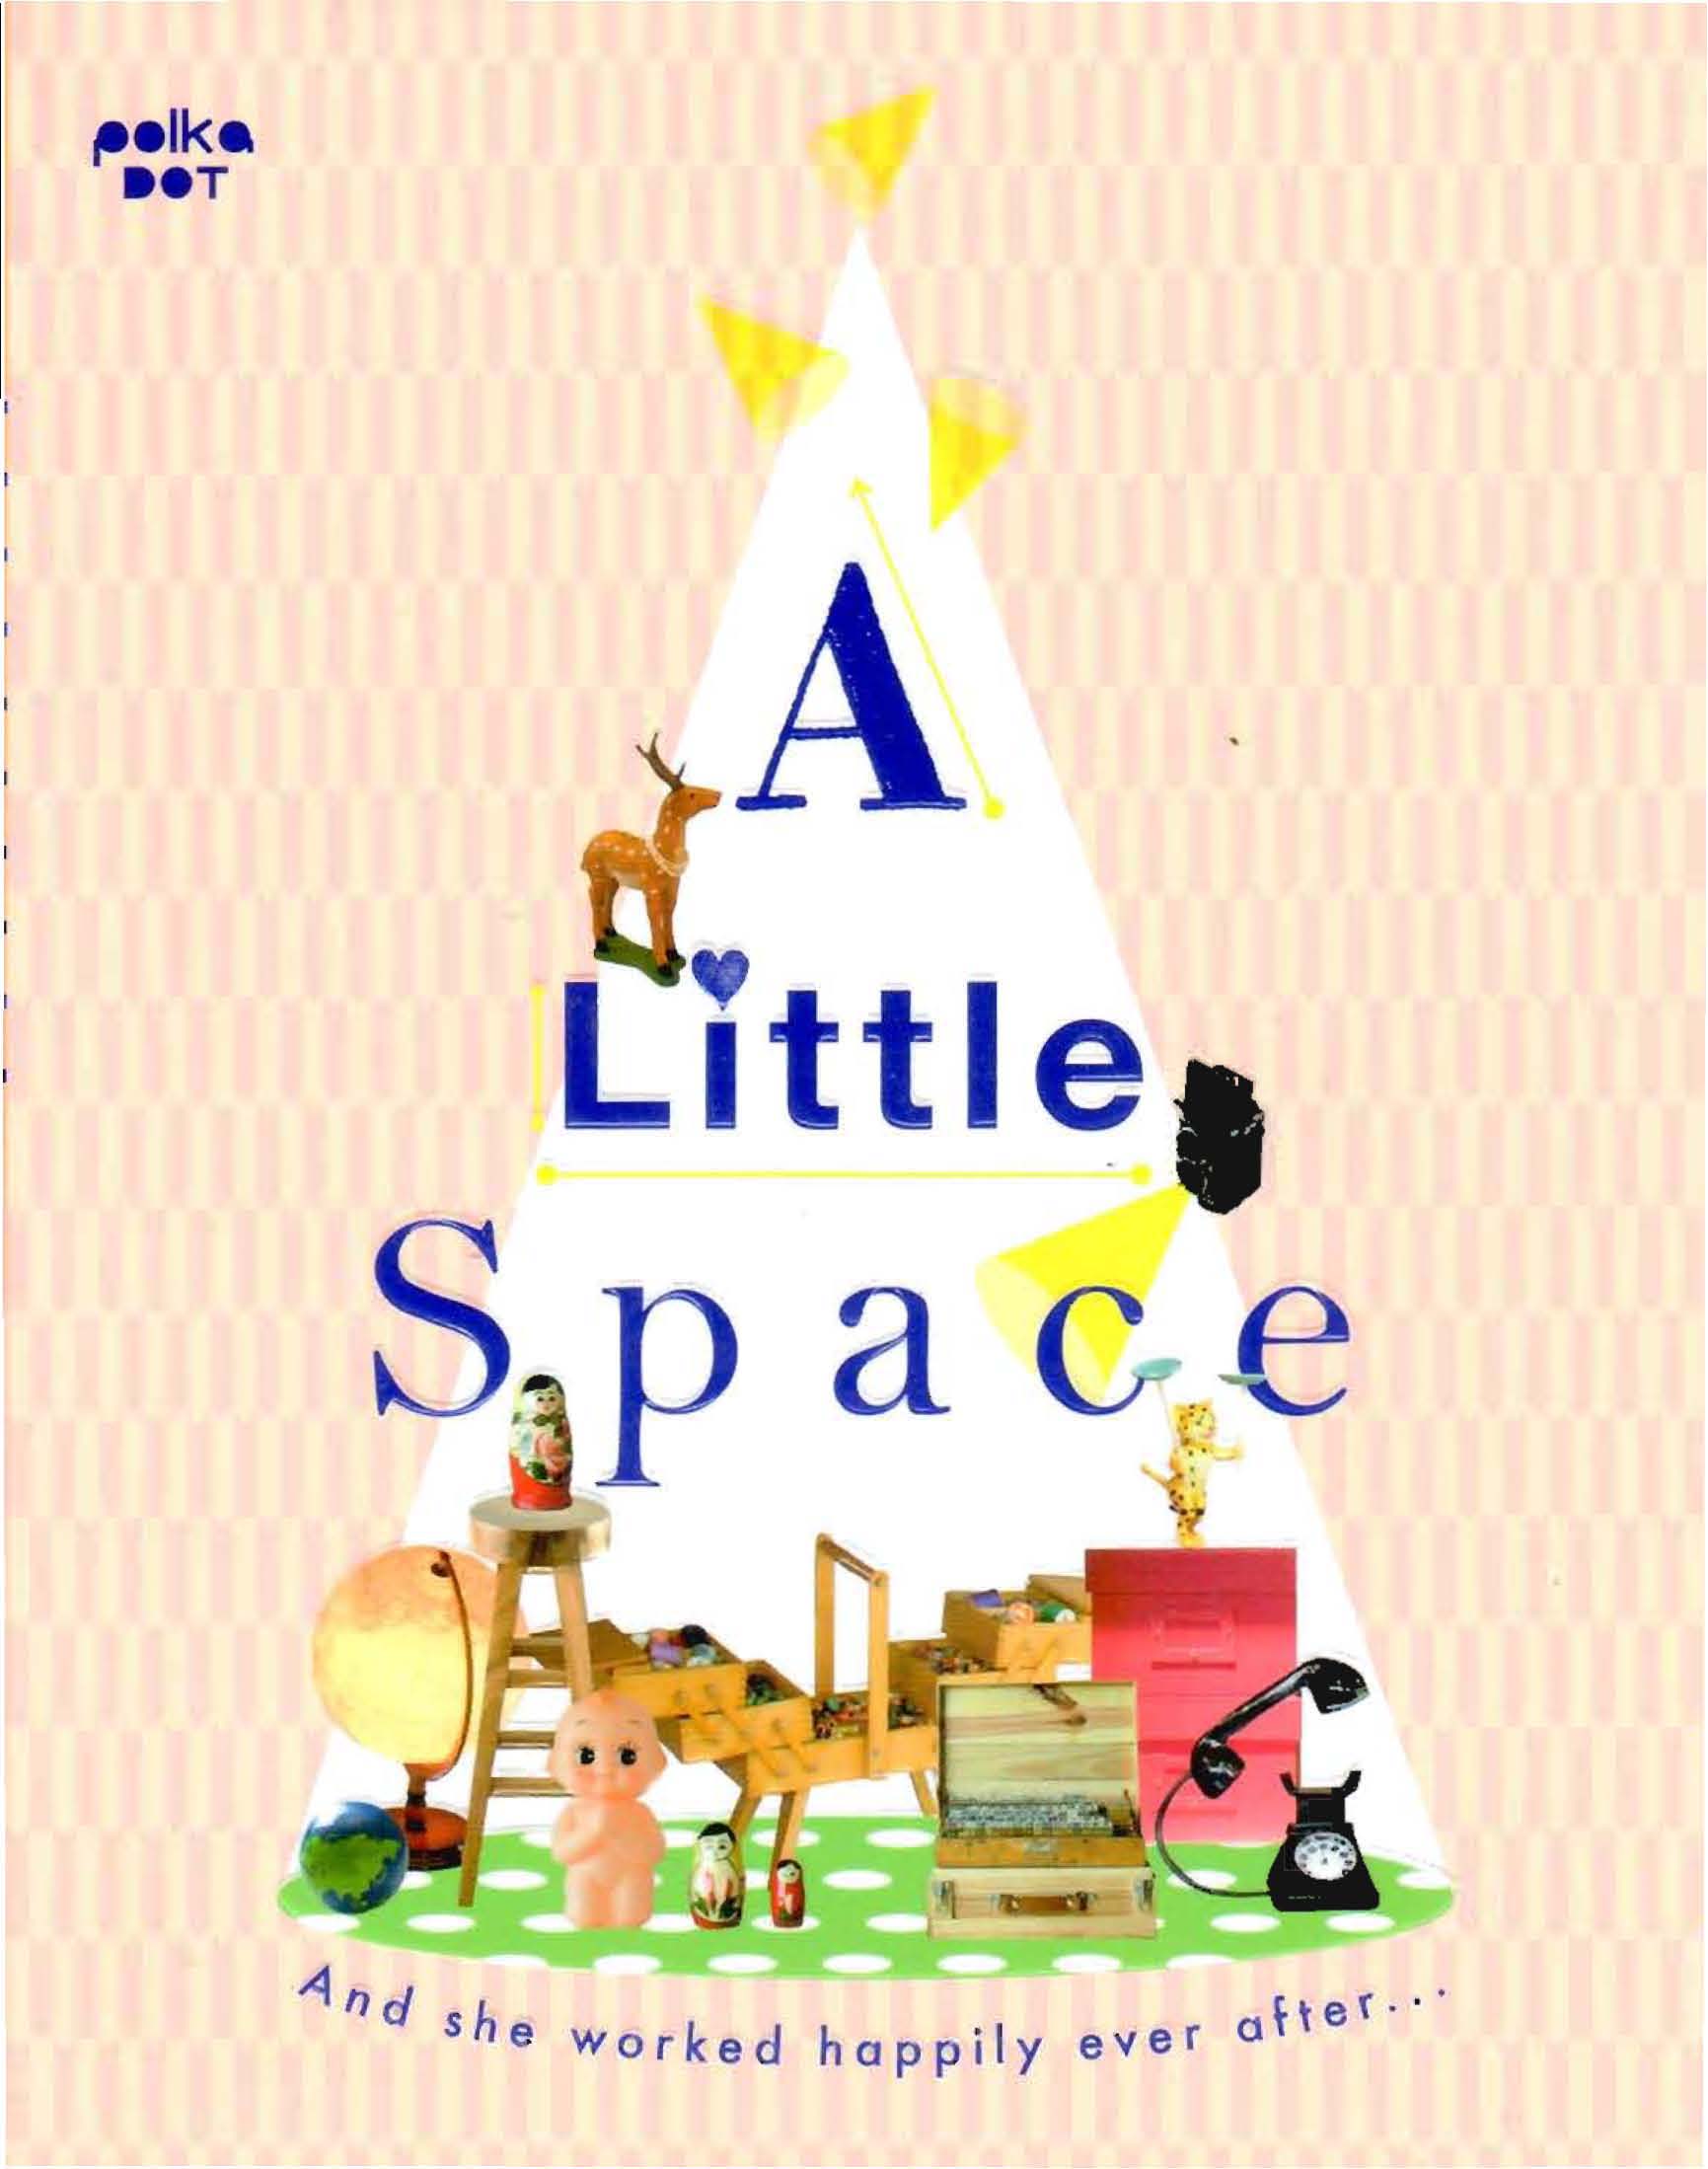 A Little Space